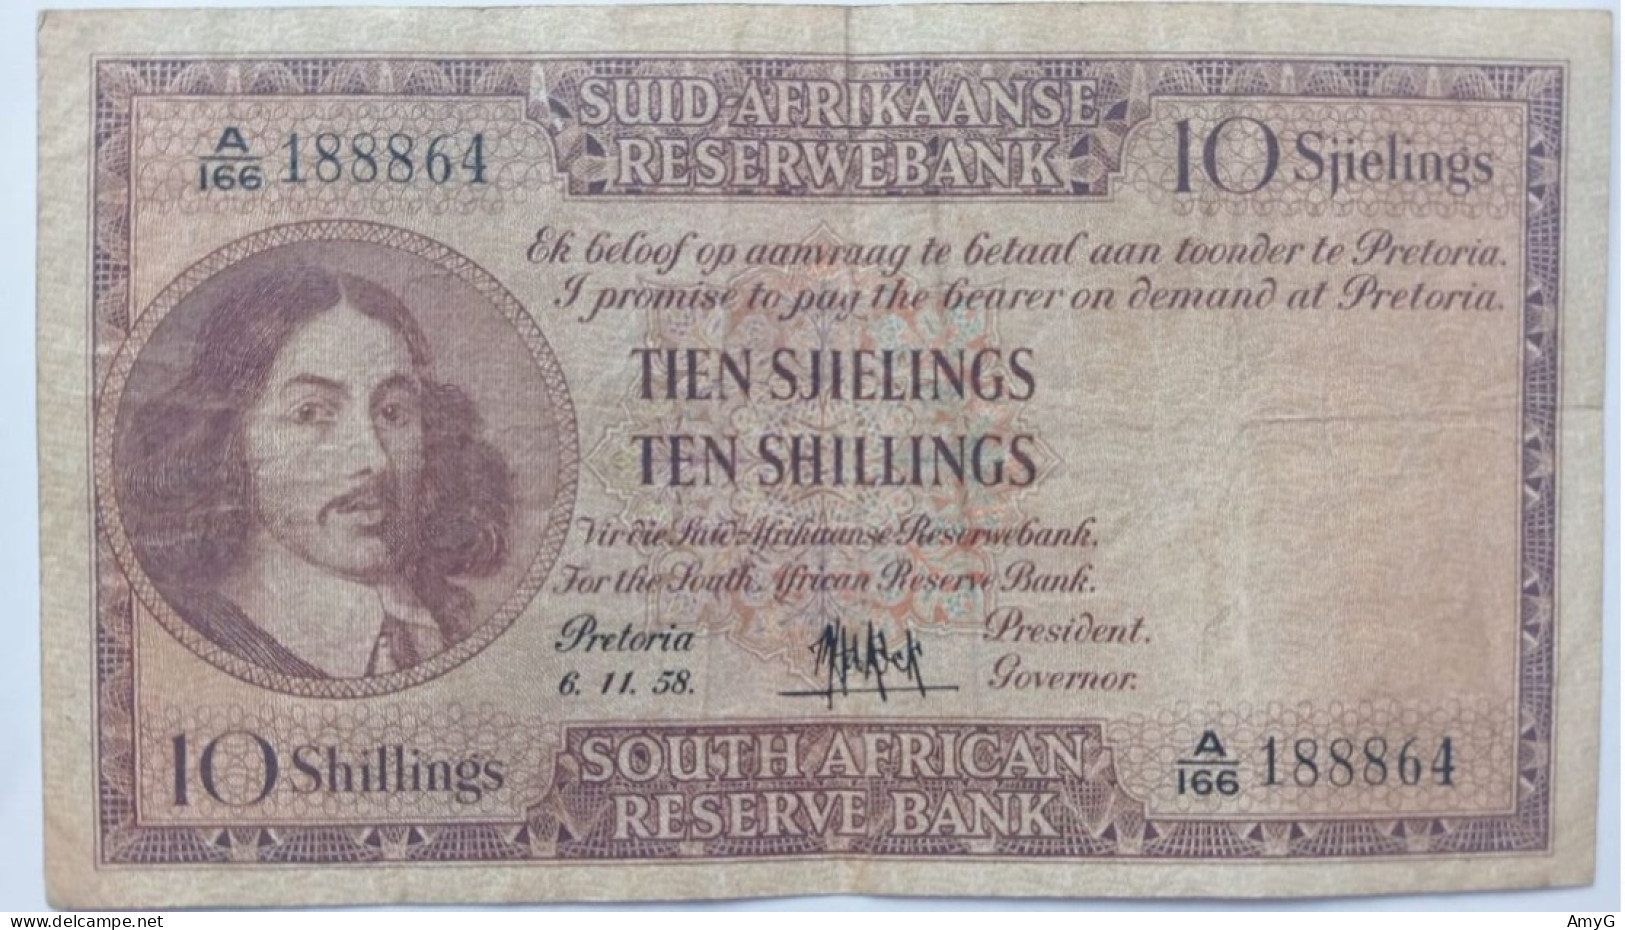 1958 South Africa 10 Shillings Note - Sudafrica